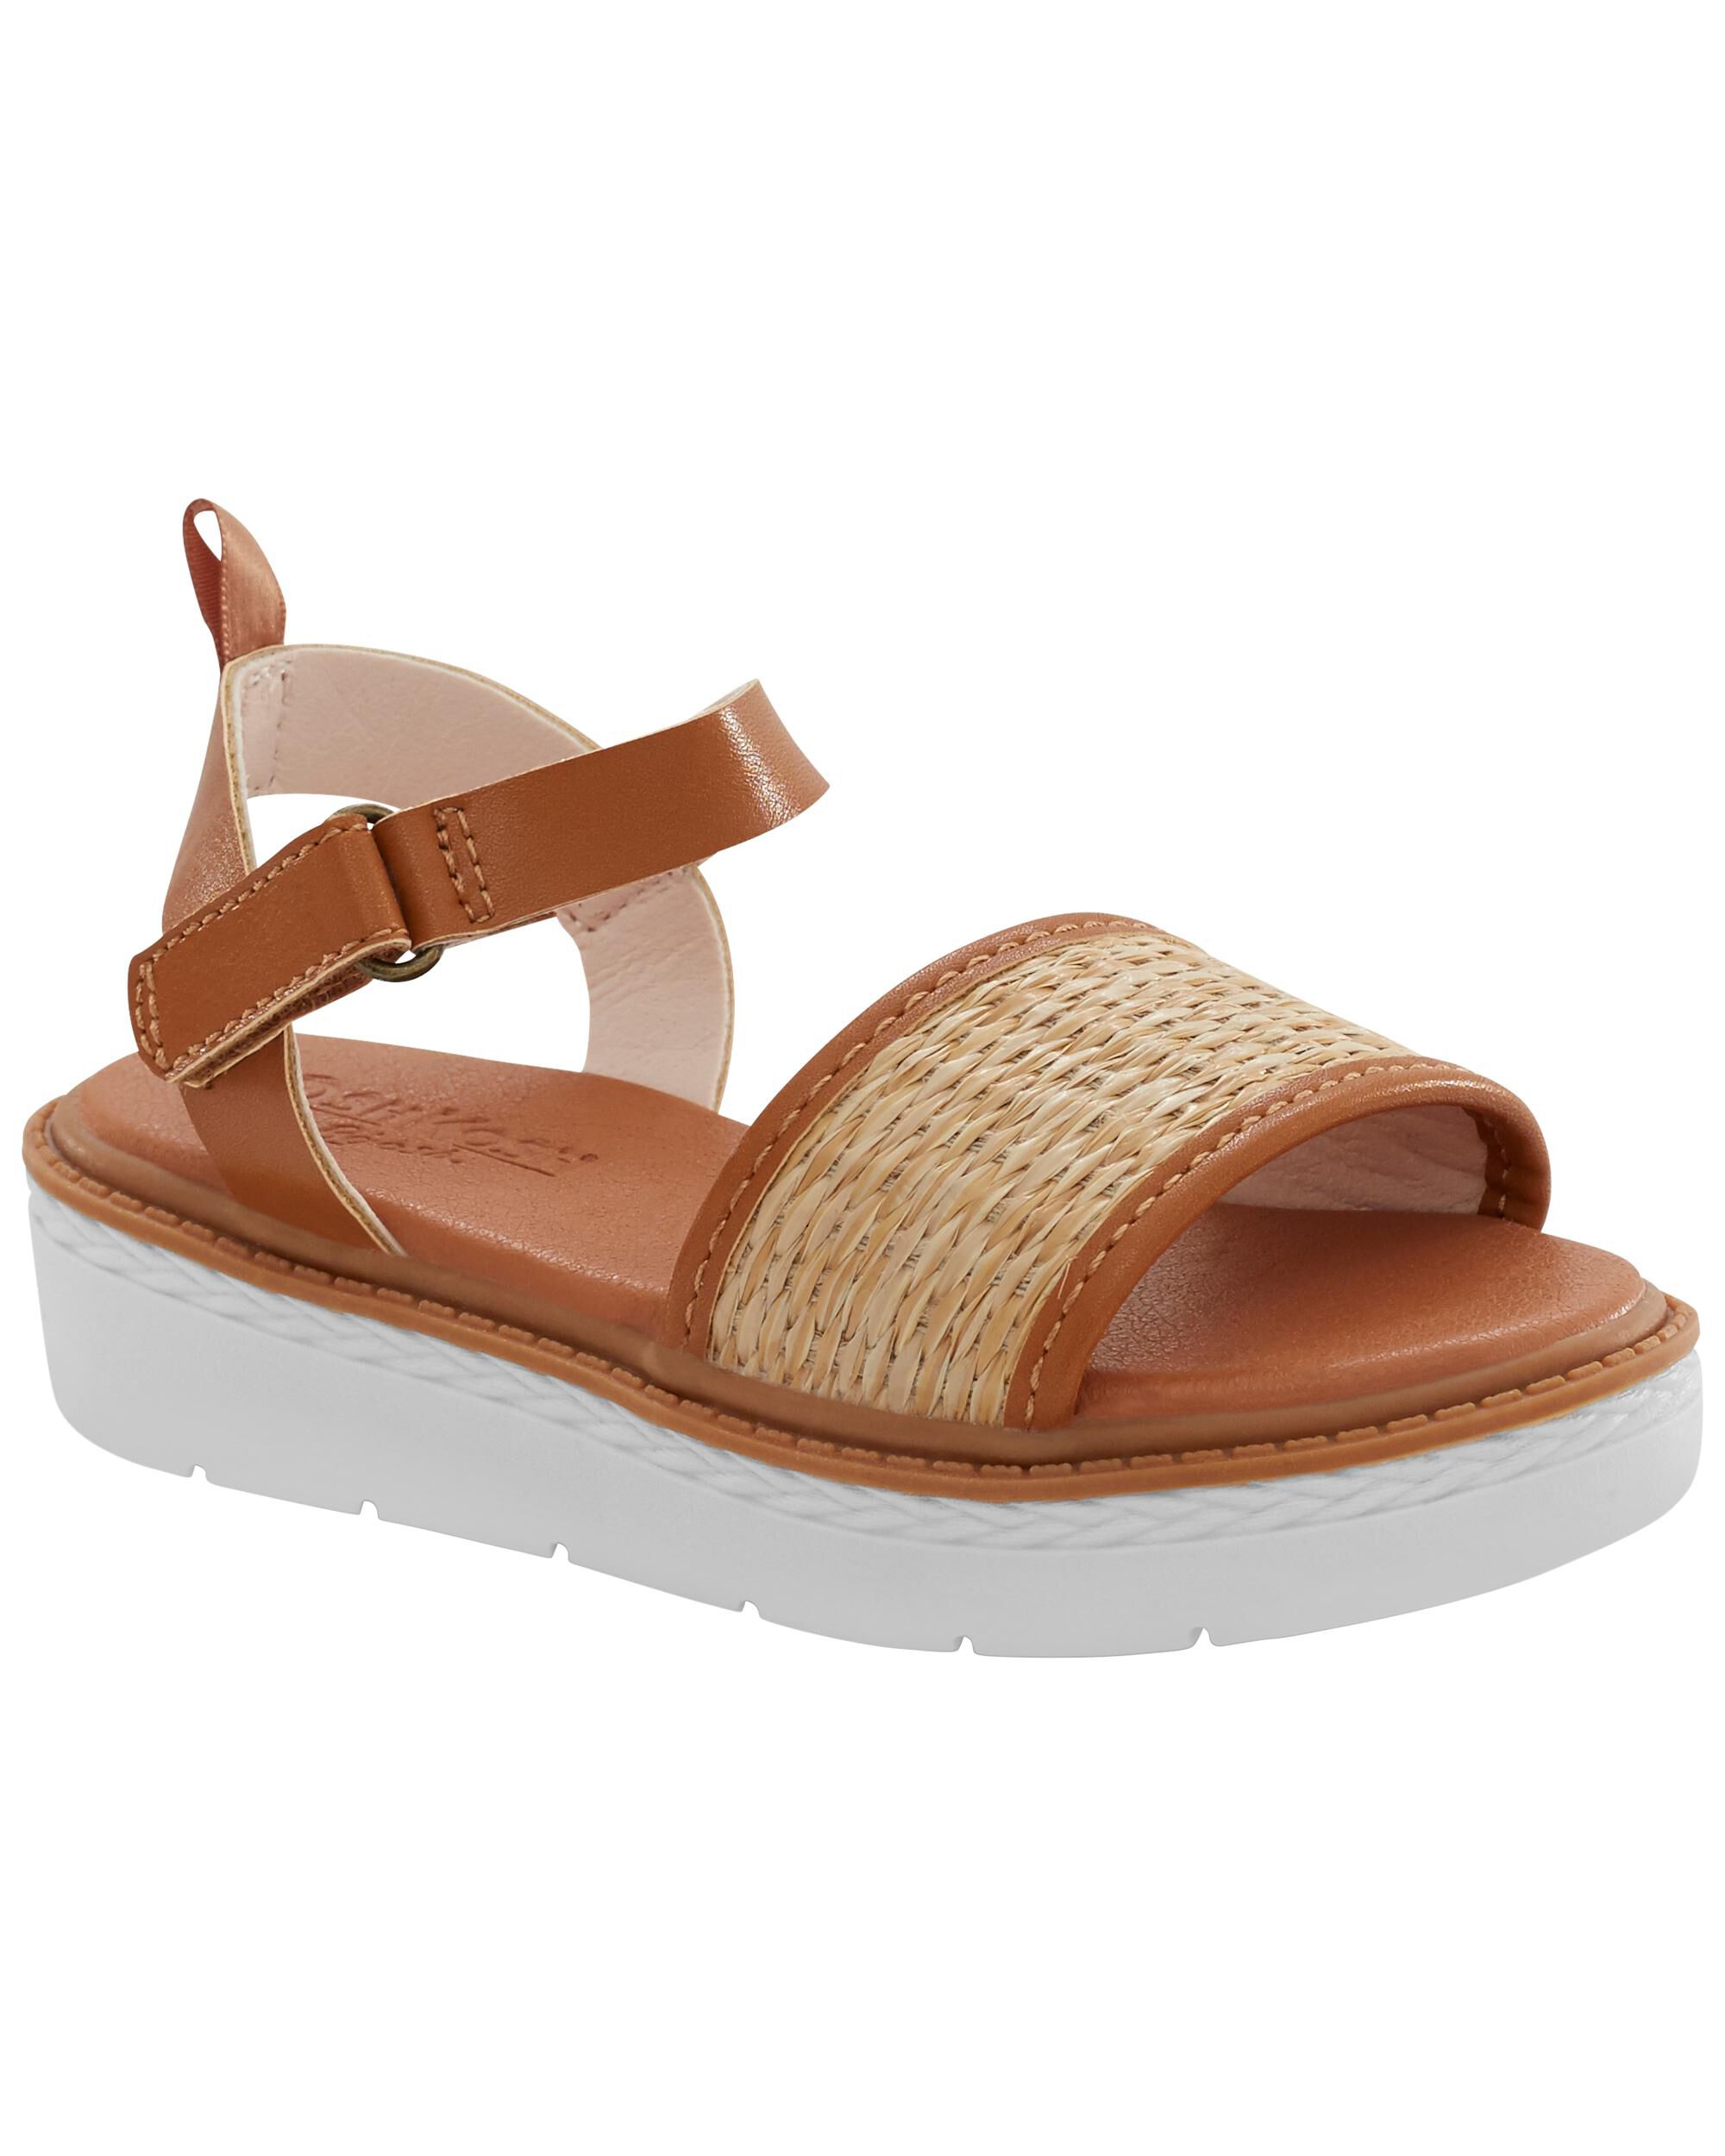 Women's Sandals, Slides & Wedge Sandals | The Shoe Company